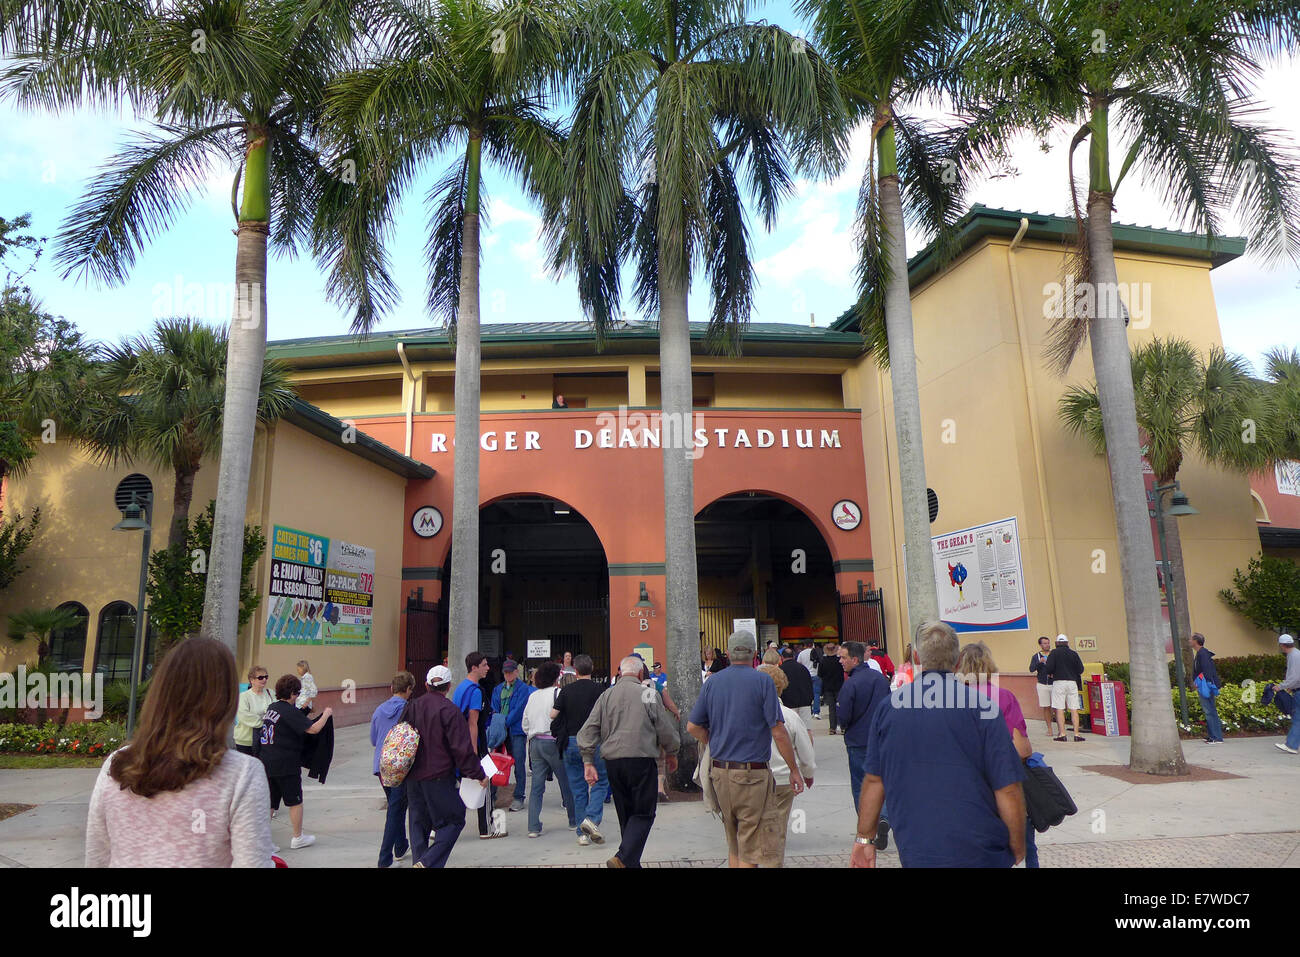 People entering the Roger Dean Stadium Albacoa Jupiter Florida Stock Photo